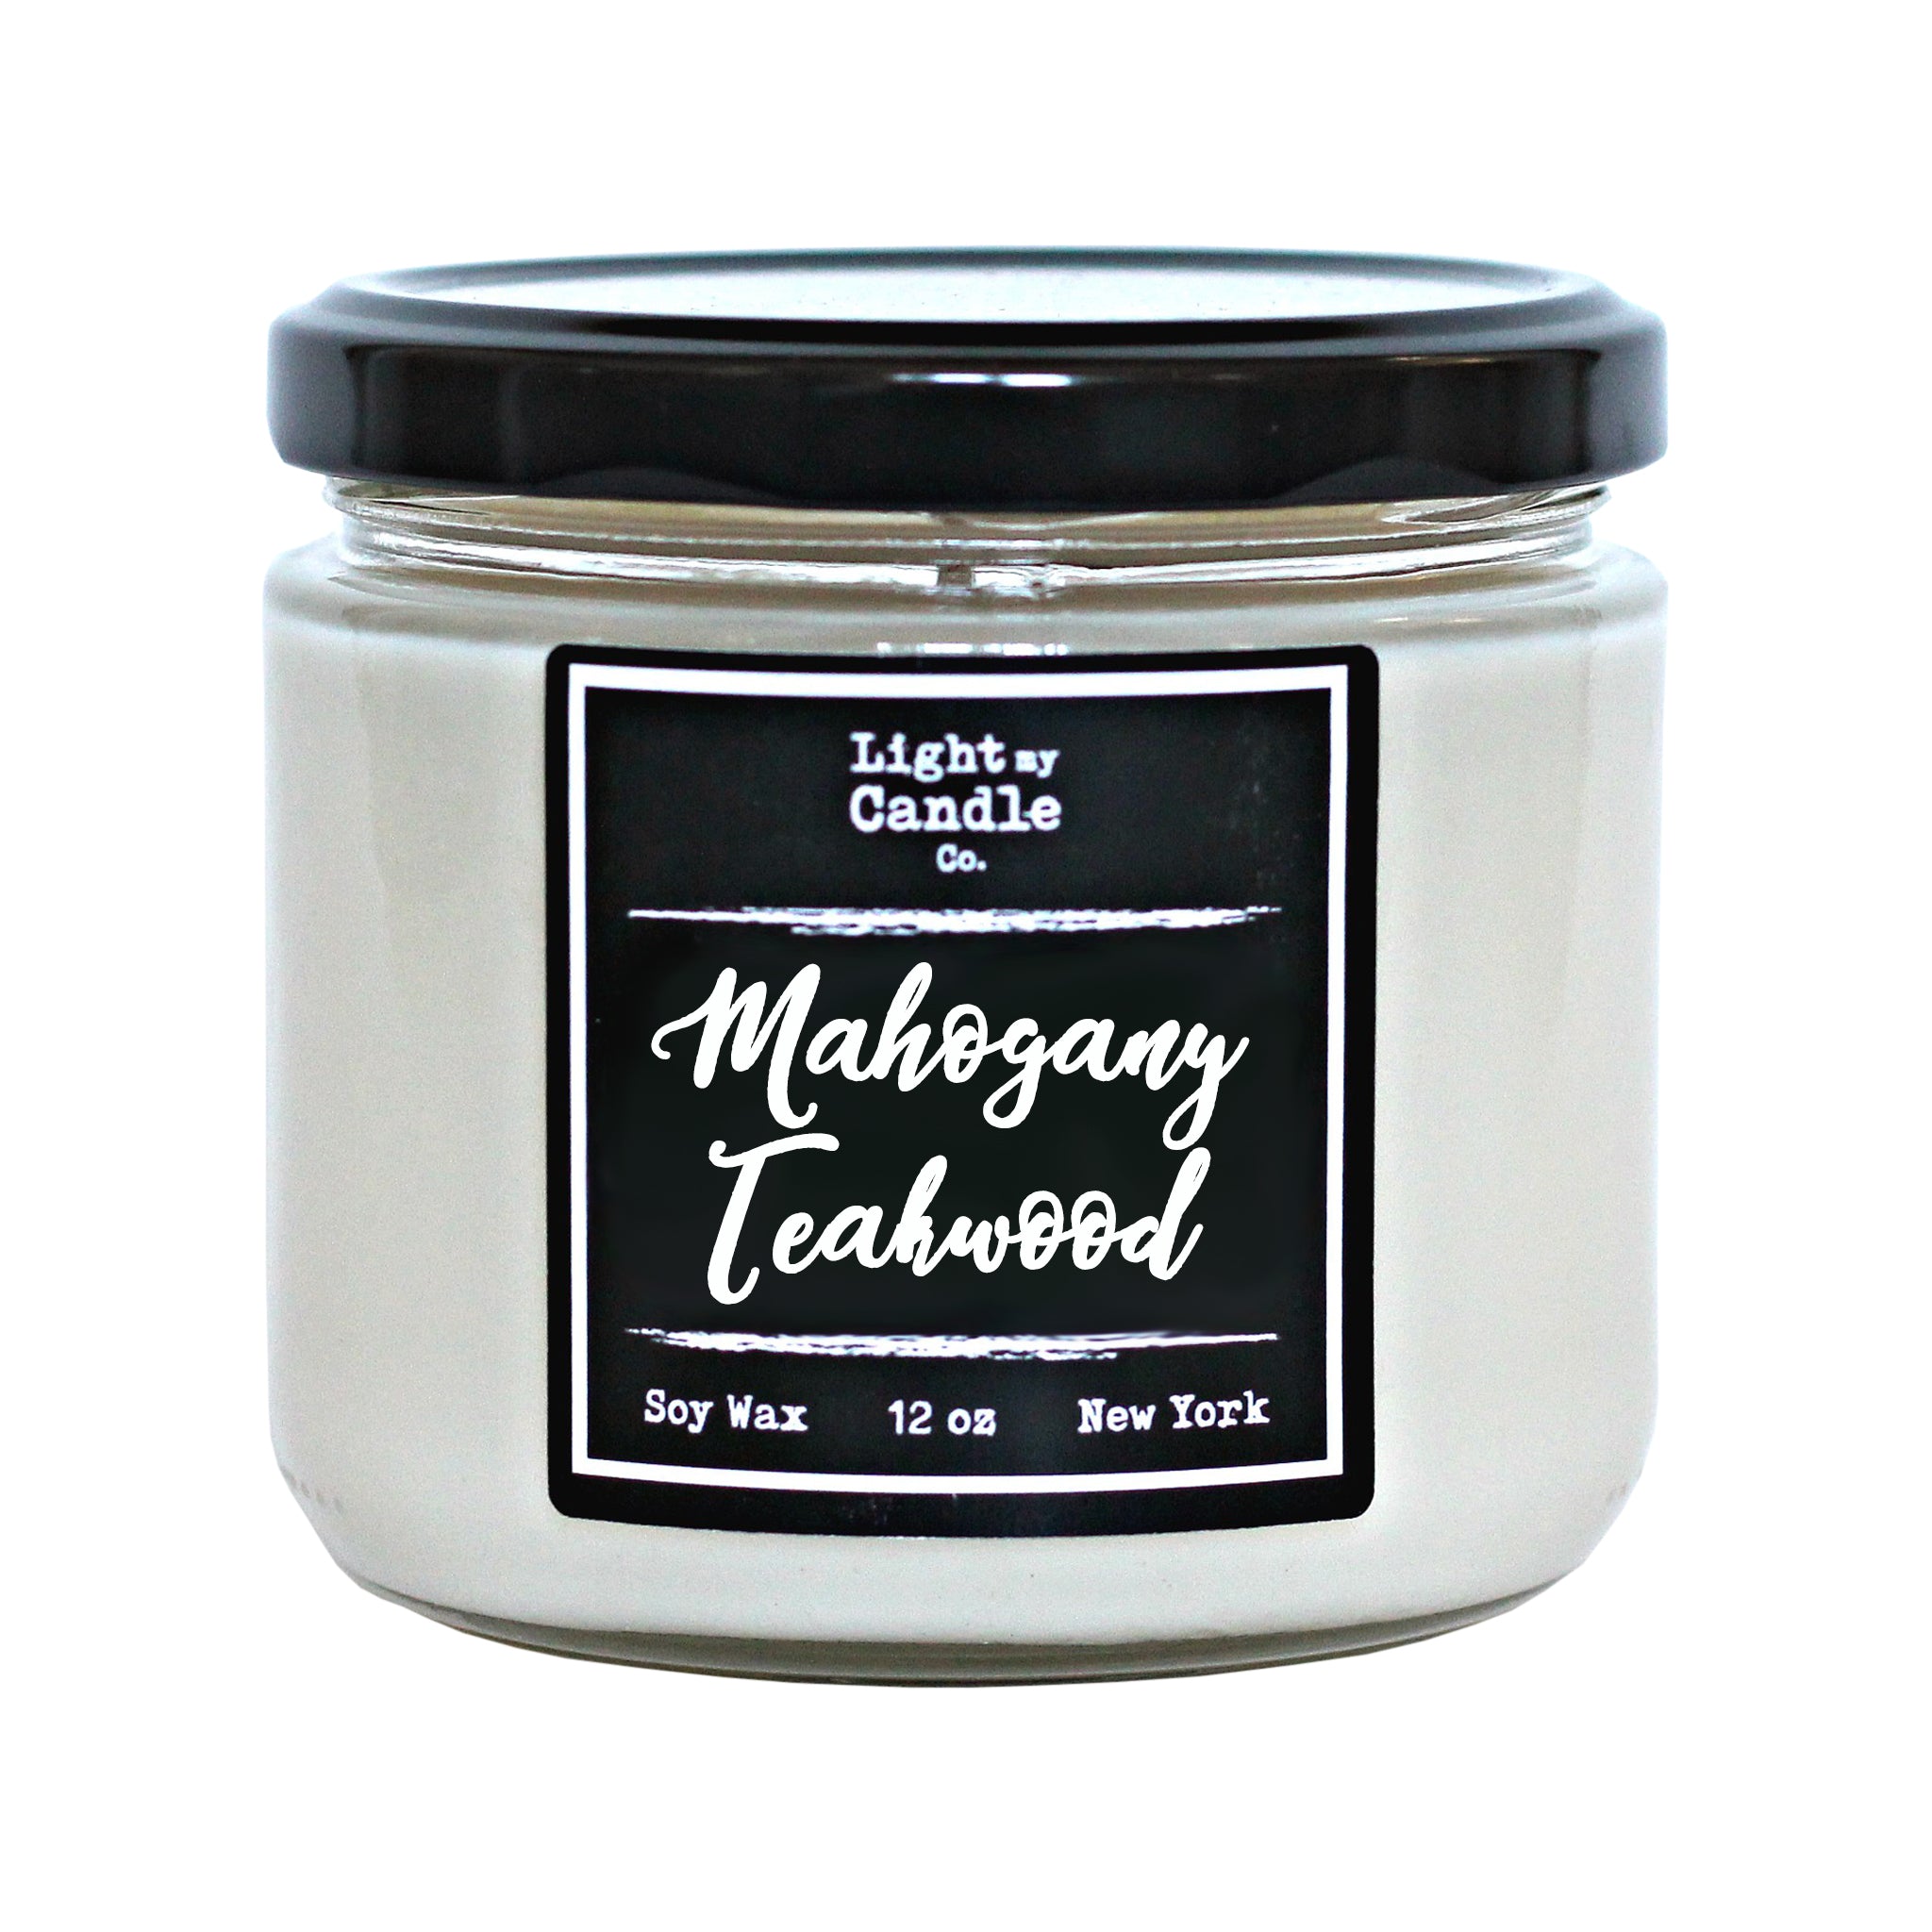 Mahogany Teakwood Bath and Body Works Candle Wax Melts Works 